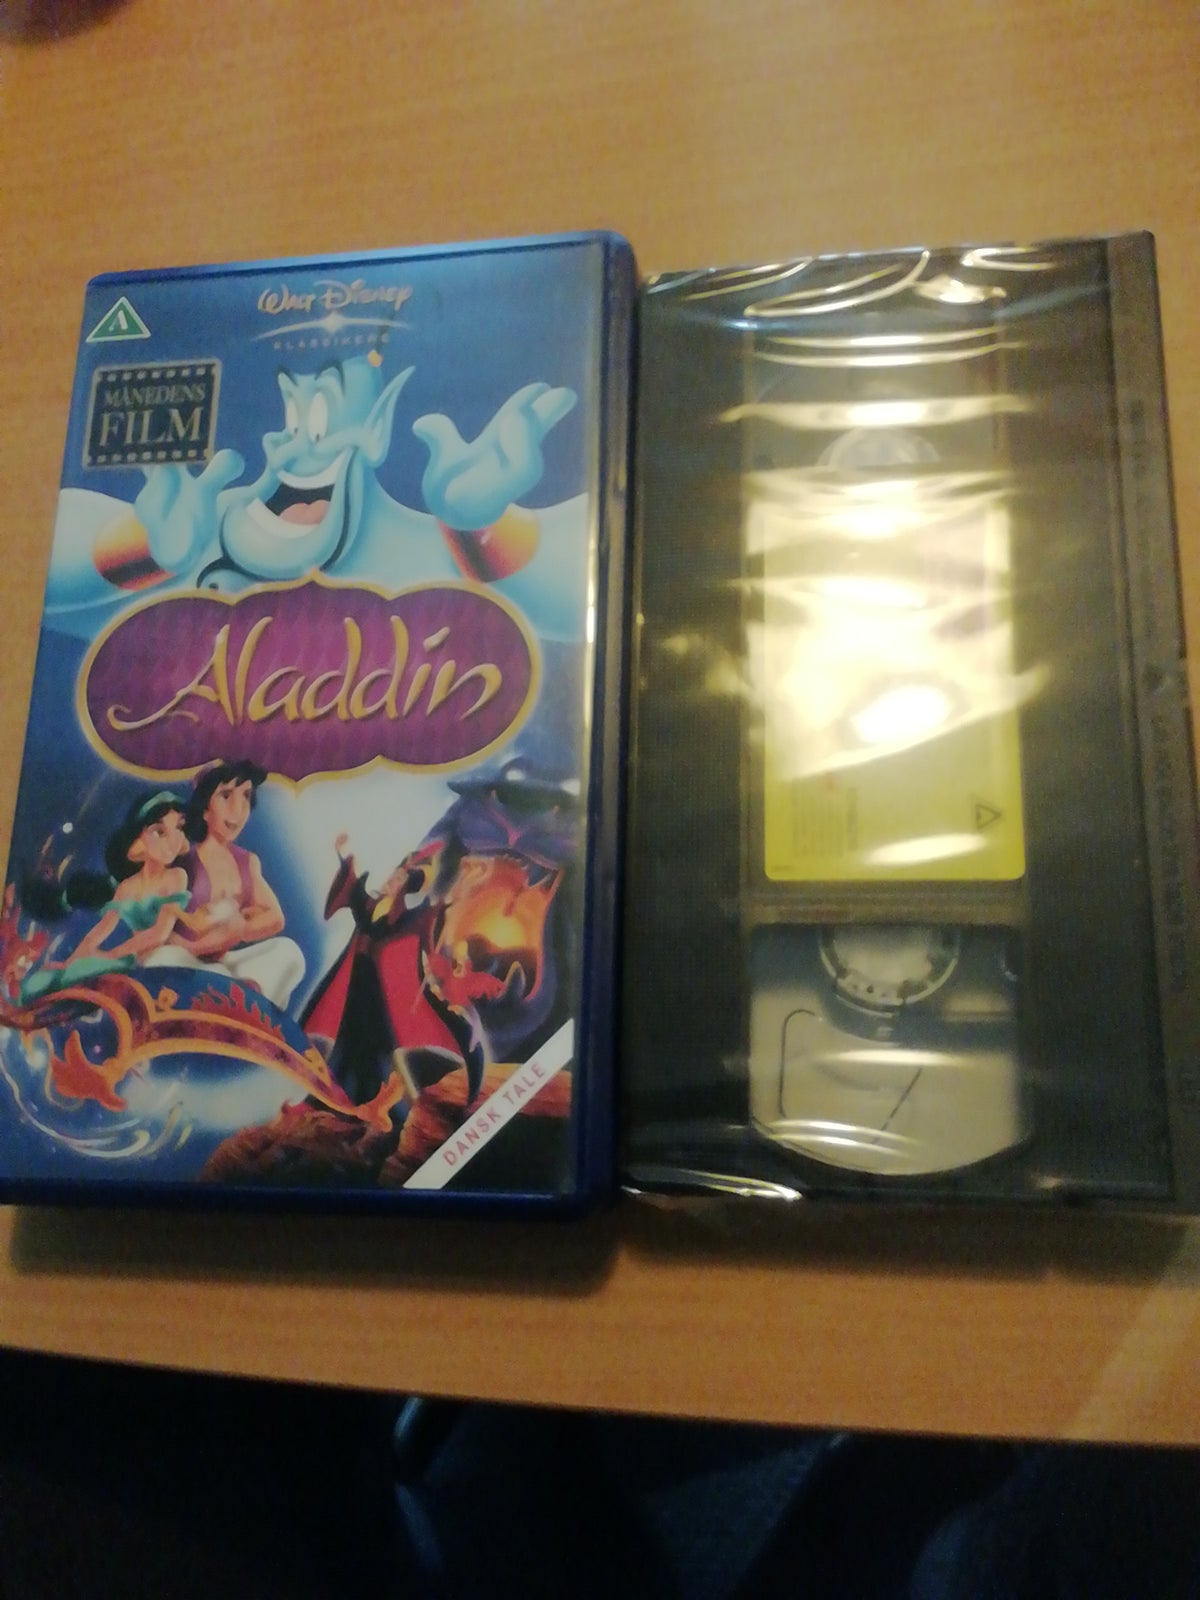 Tegnefilm, Aladdin, instruktør Walt Disney